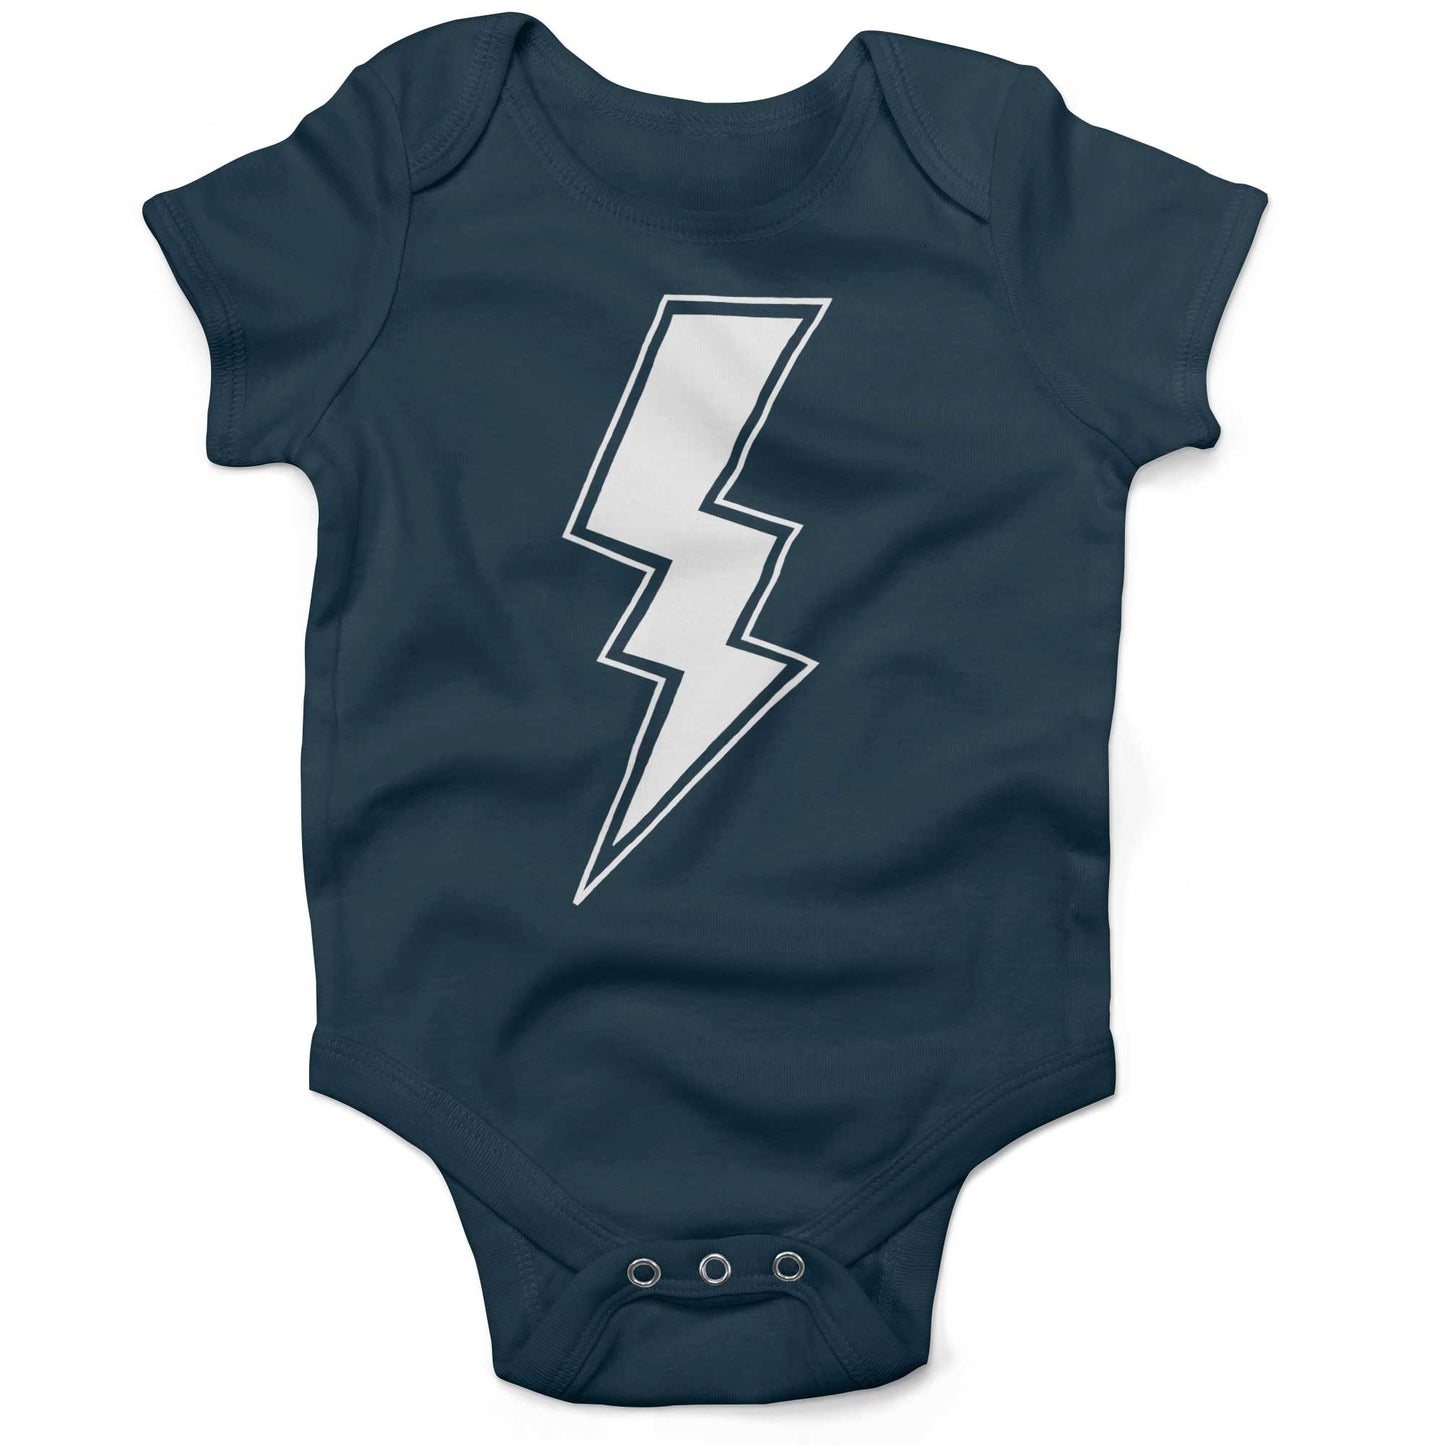 Giant Lightning Bolt Infant Bodysuit or Raglan Baby Tee-Organic Pacific Blue-3-6 months